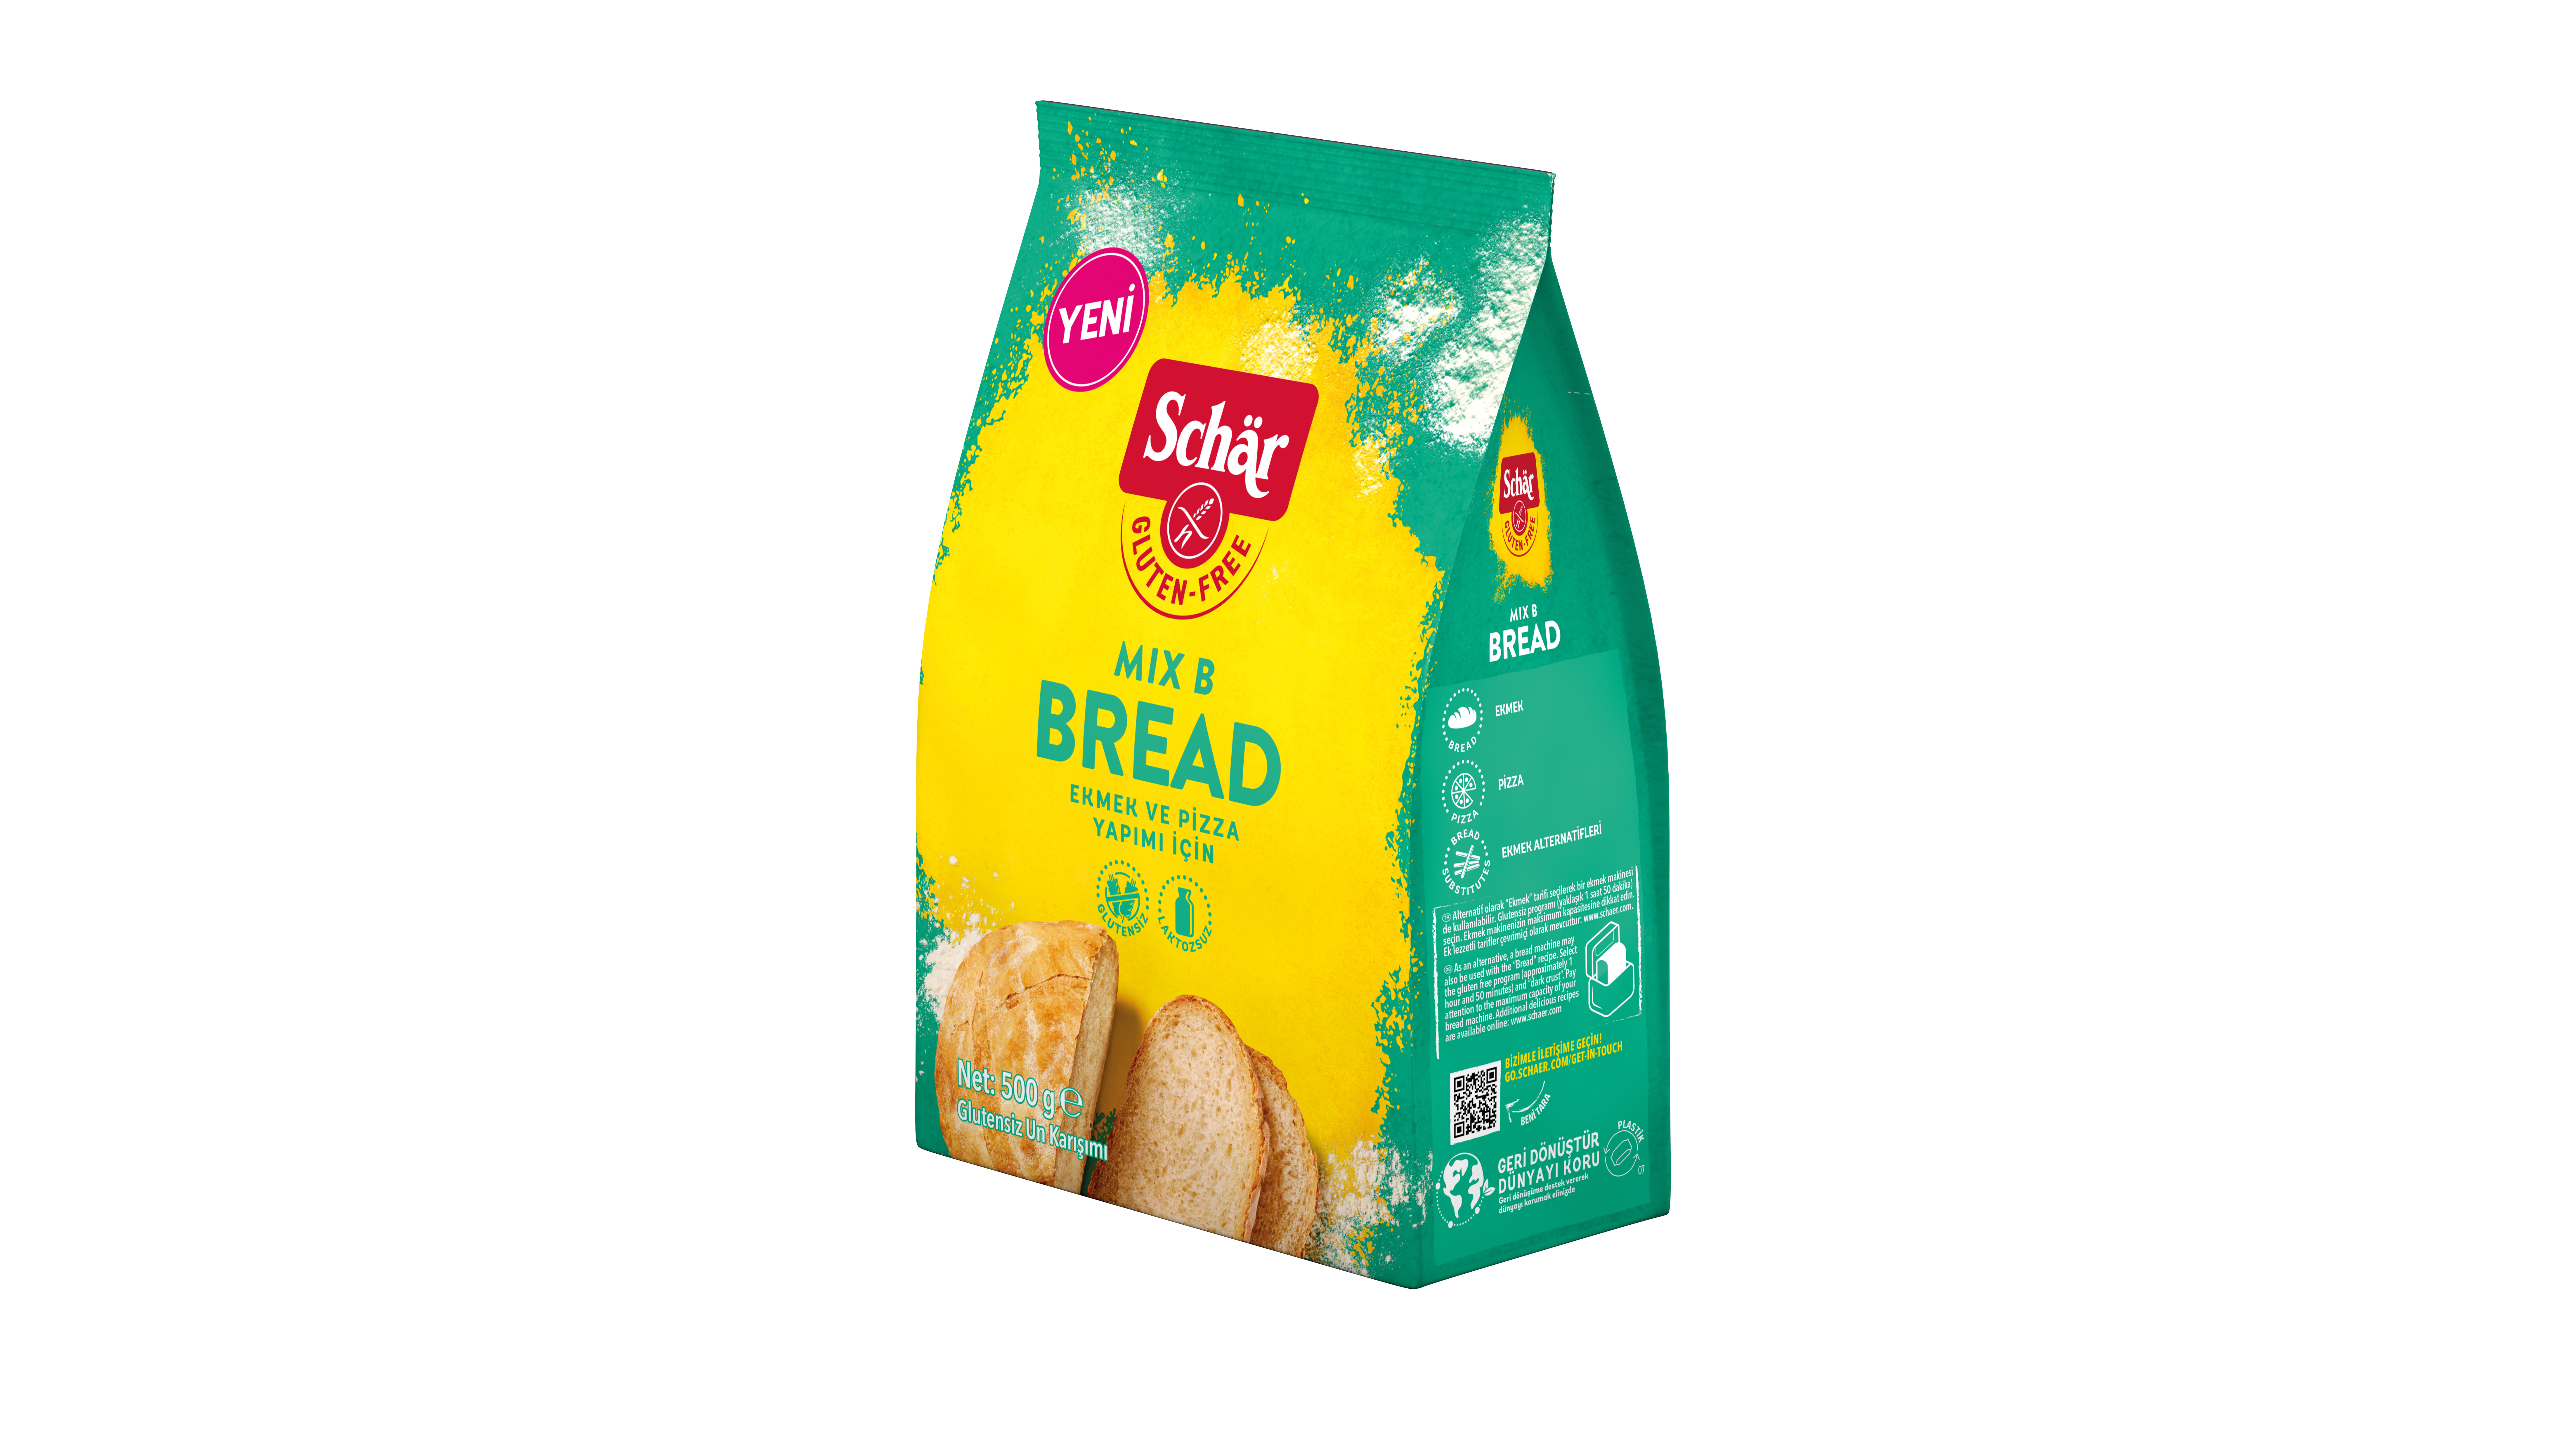 Schär Mix B Bread